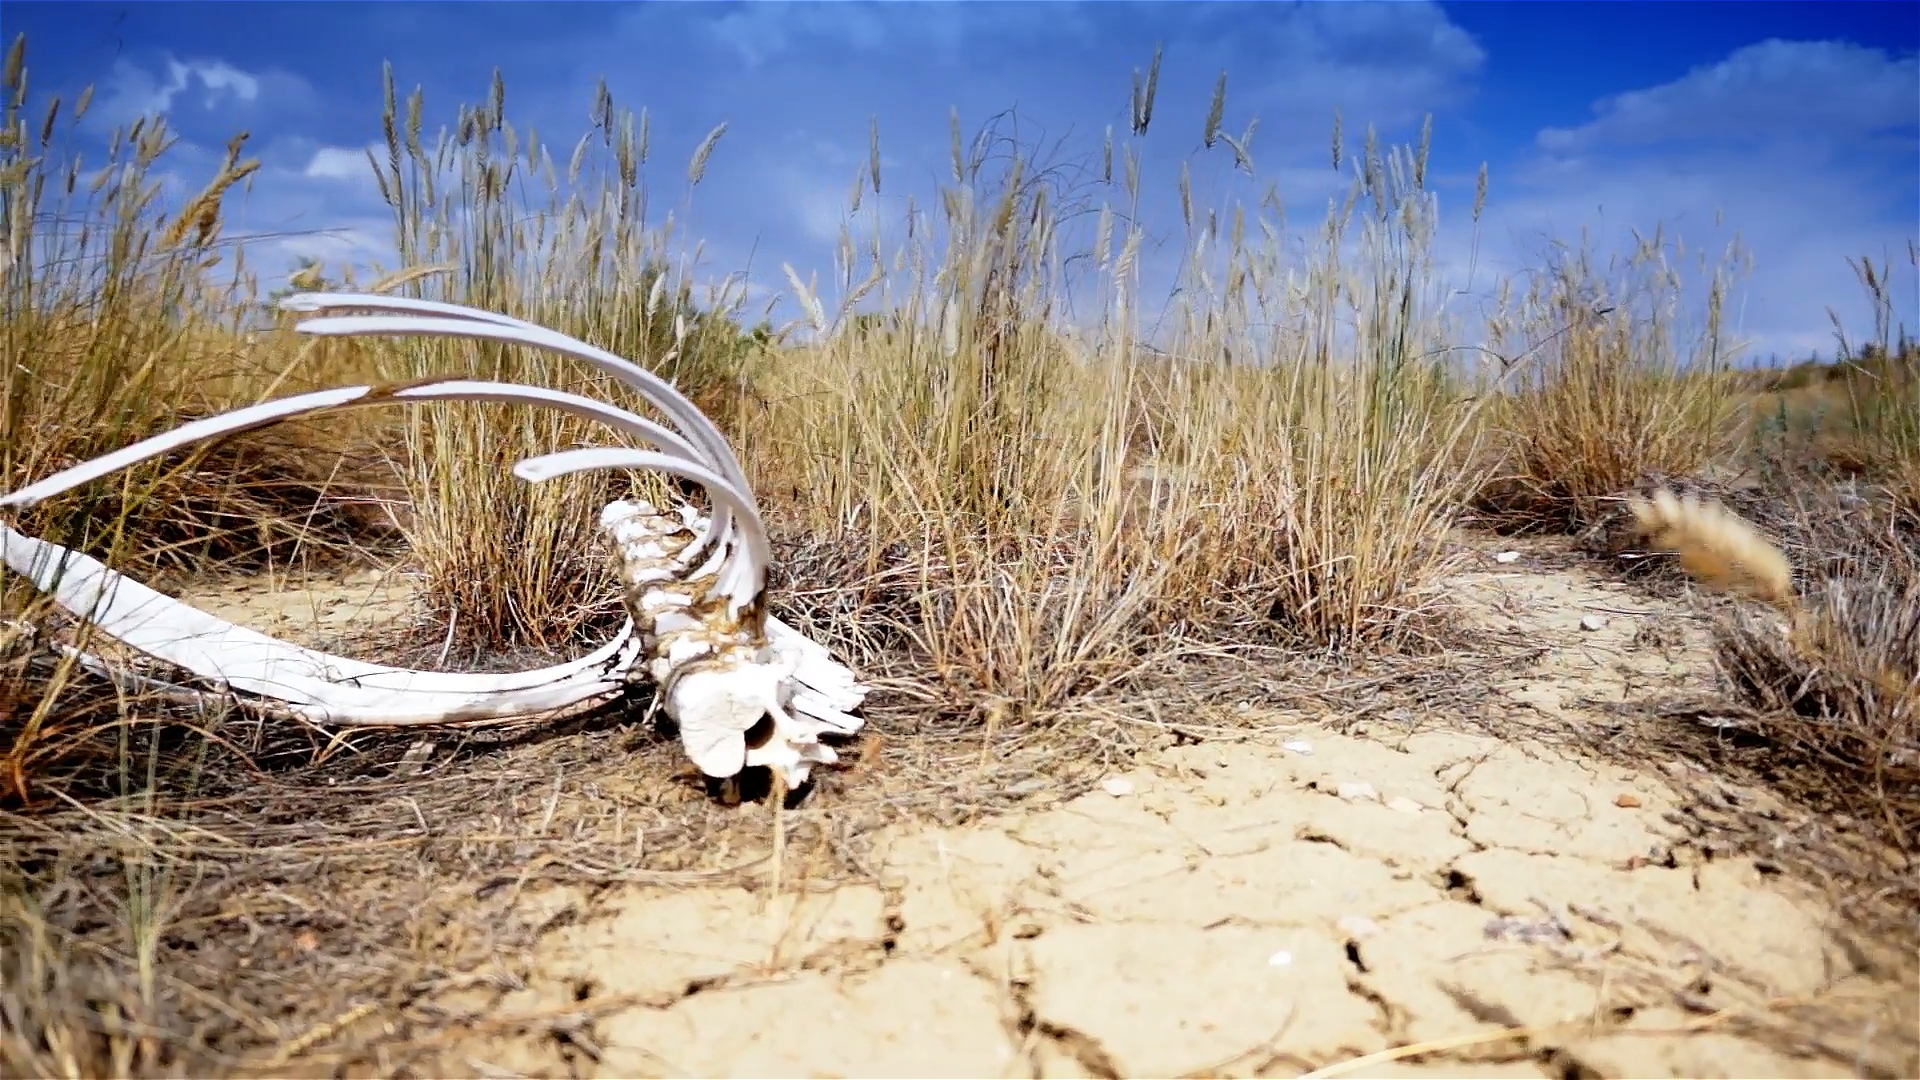 Dry bones on the dry desert ground. No rain. Stock Video Footage ...